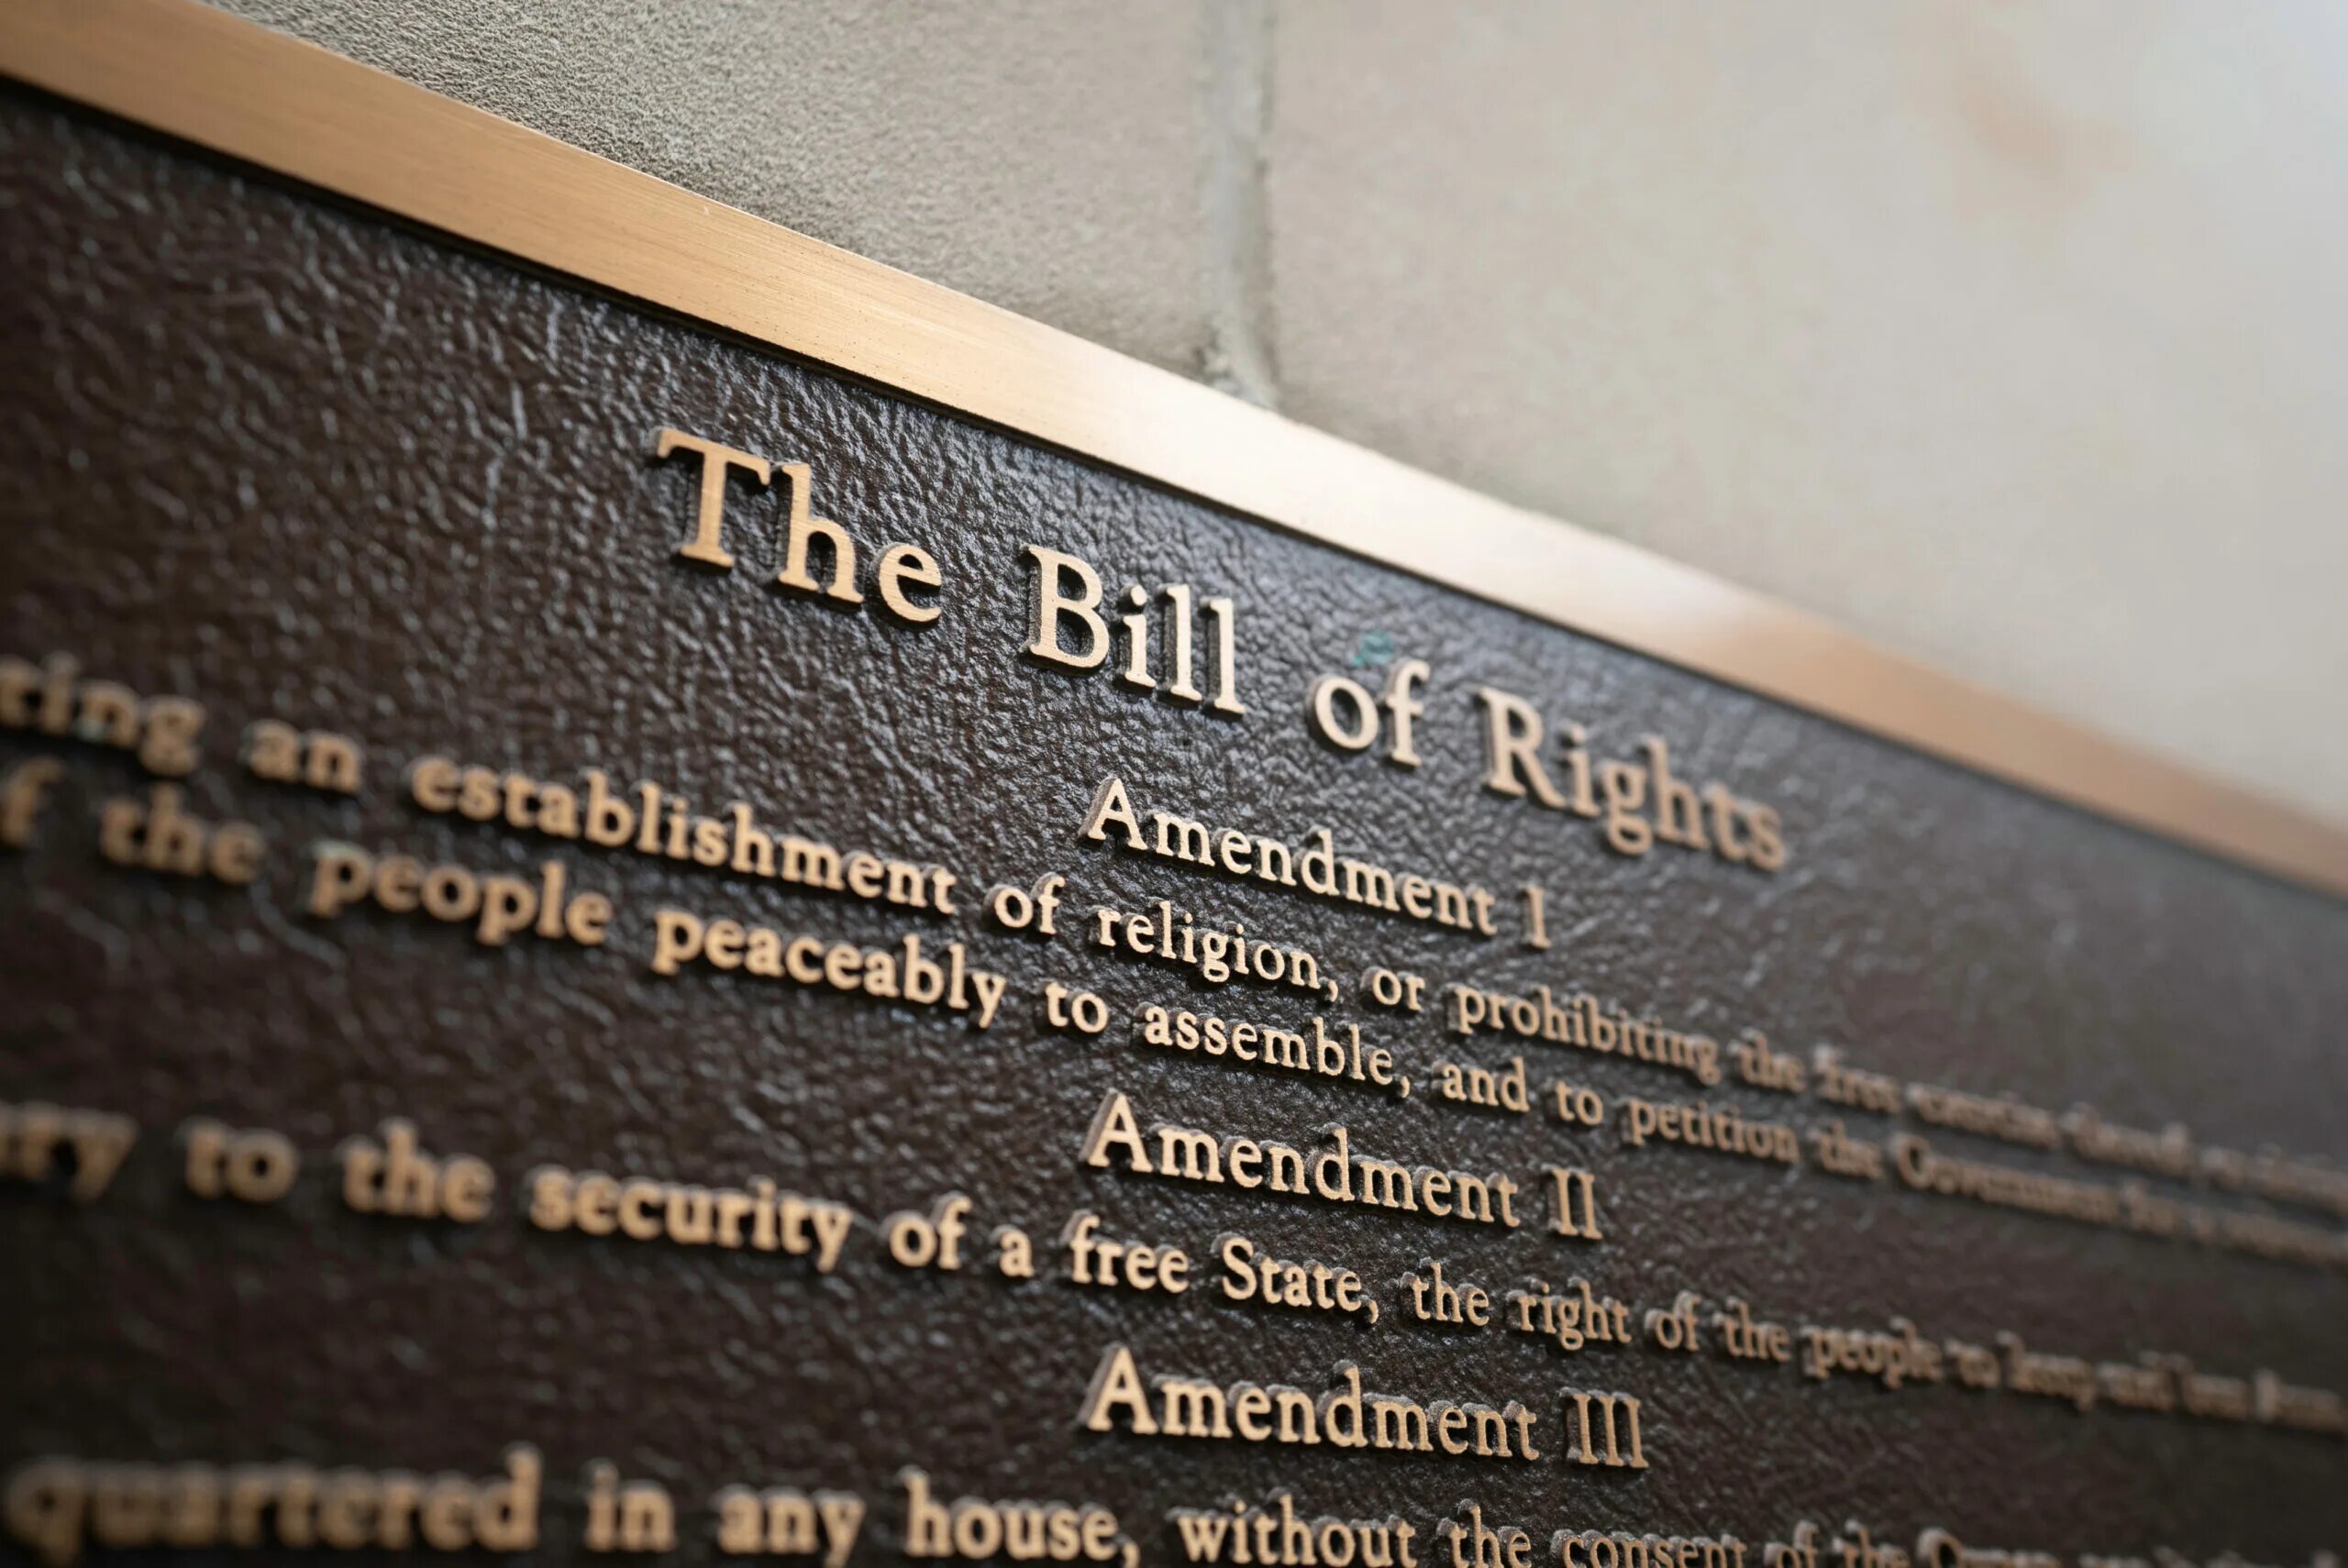 The Bill of rights. Международный Билль прав человека. Международный Билль о правах. Билль о правах США.